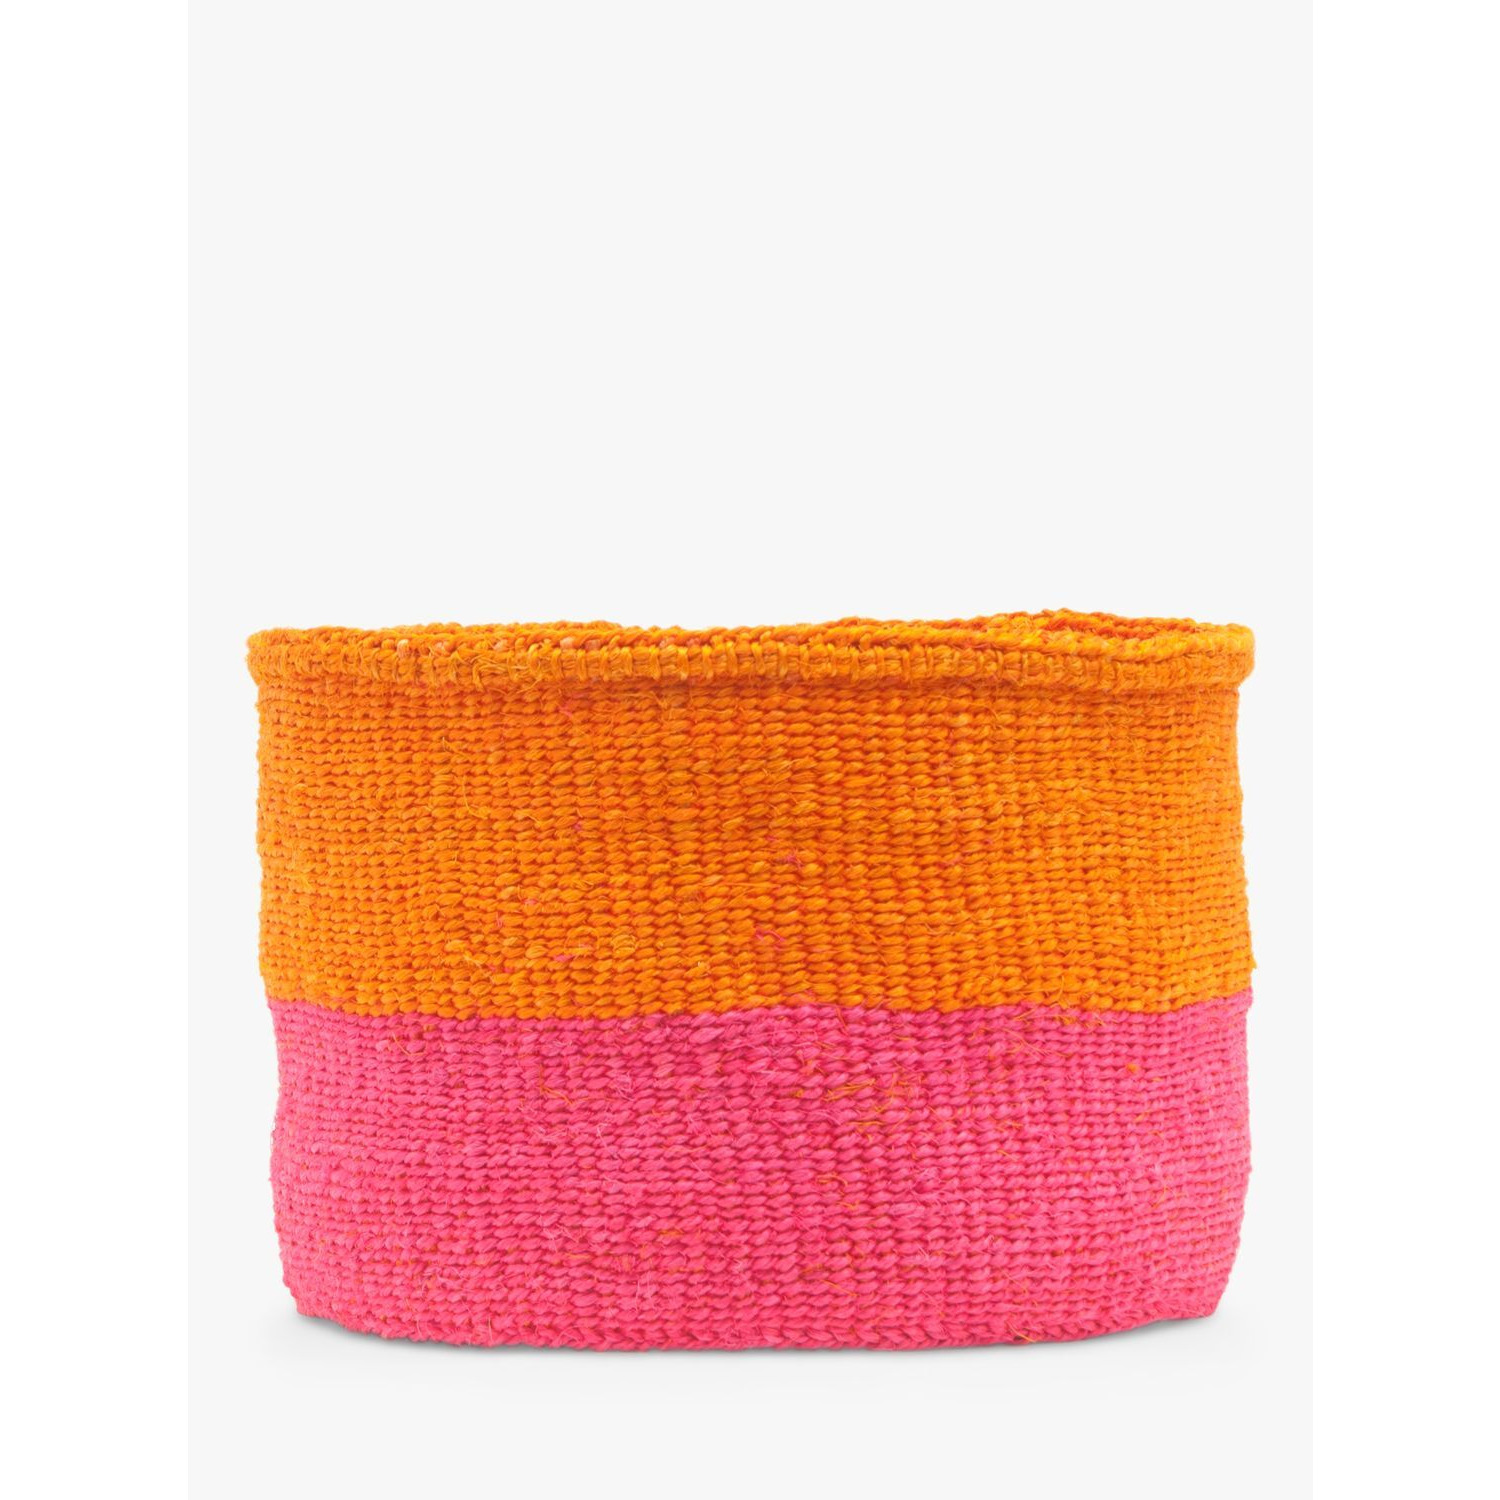 The Basket Room Kali Woven Storage Basket, Orange/Pink, Extra Small - image 1